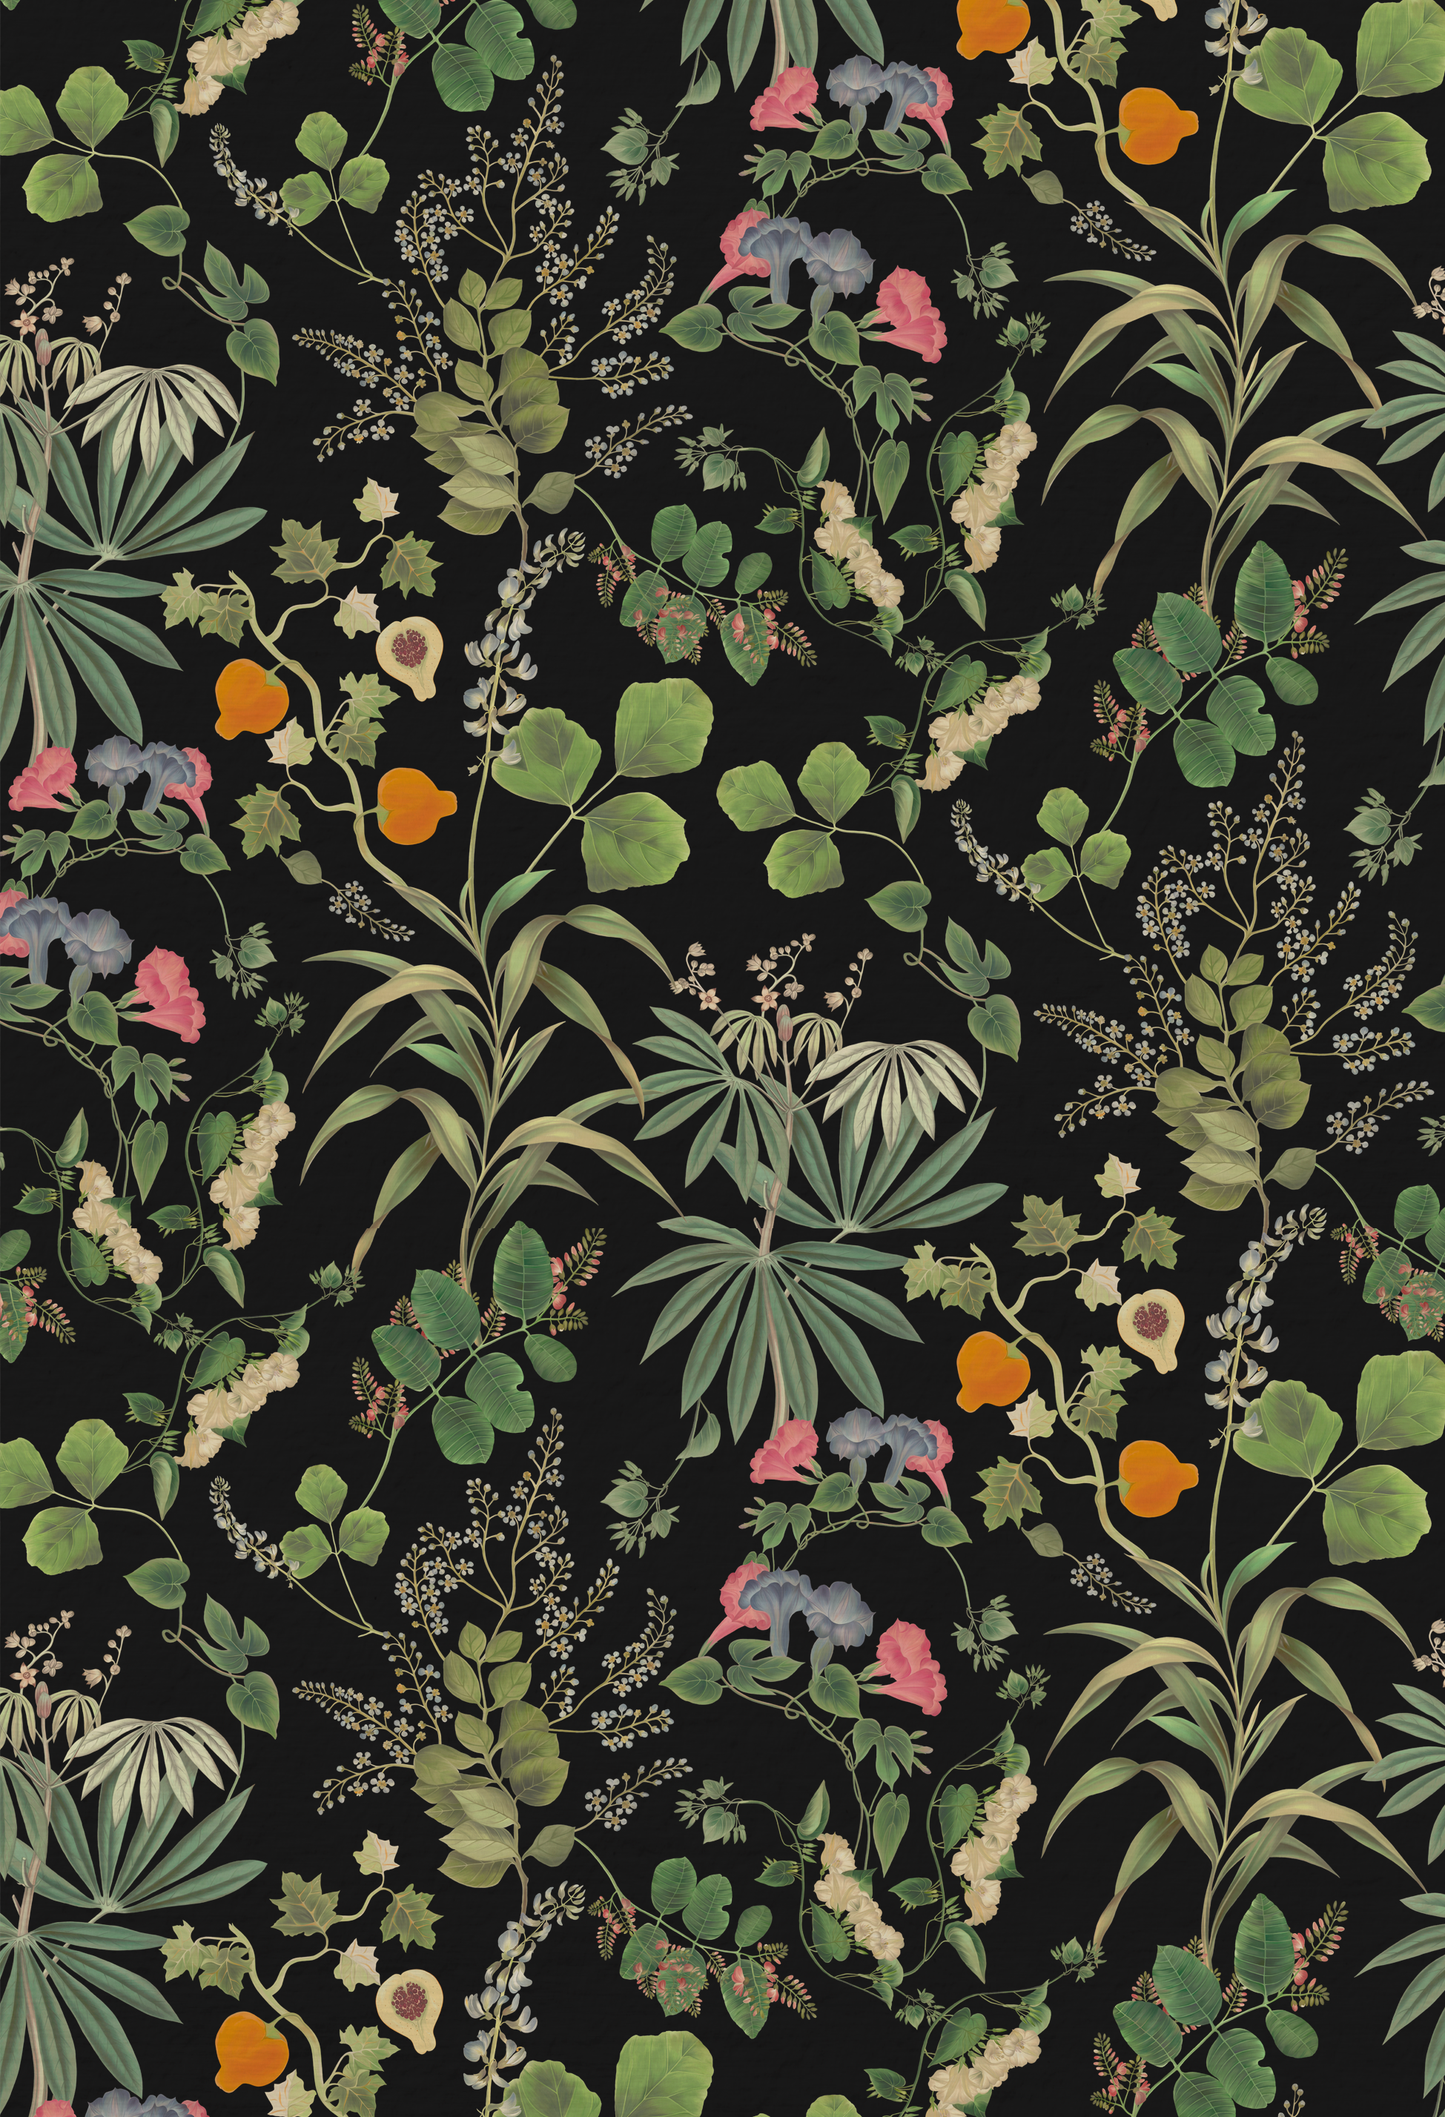 Patterned dark botanical floral wallpaper with orange fruits of Eden Wallpaper in Night from Deus ex Gardenia.